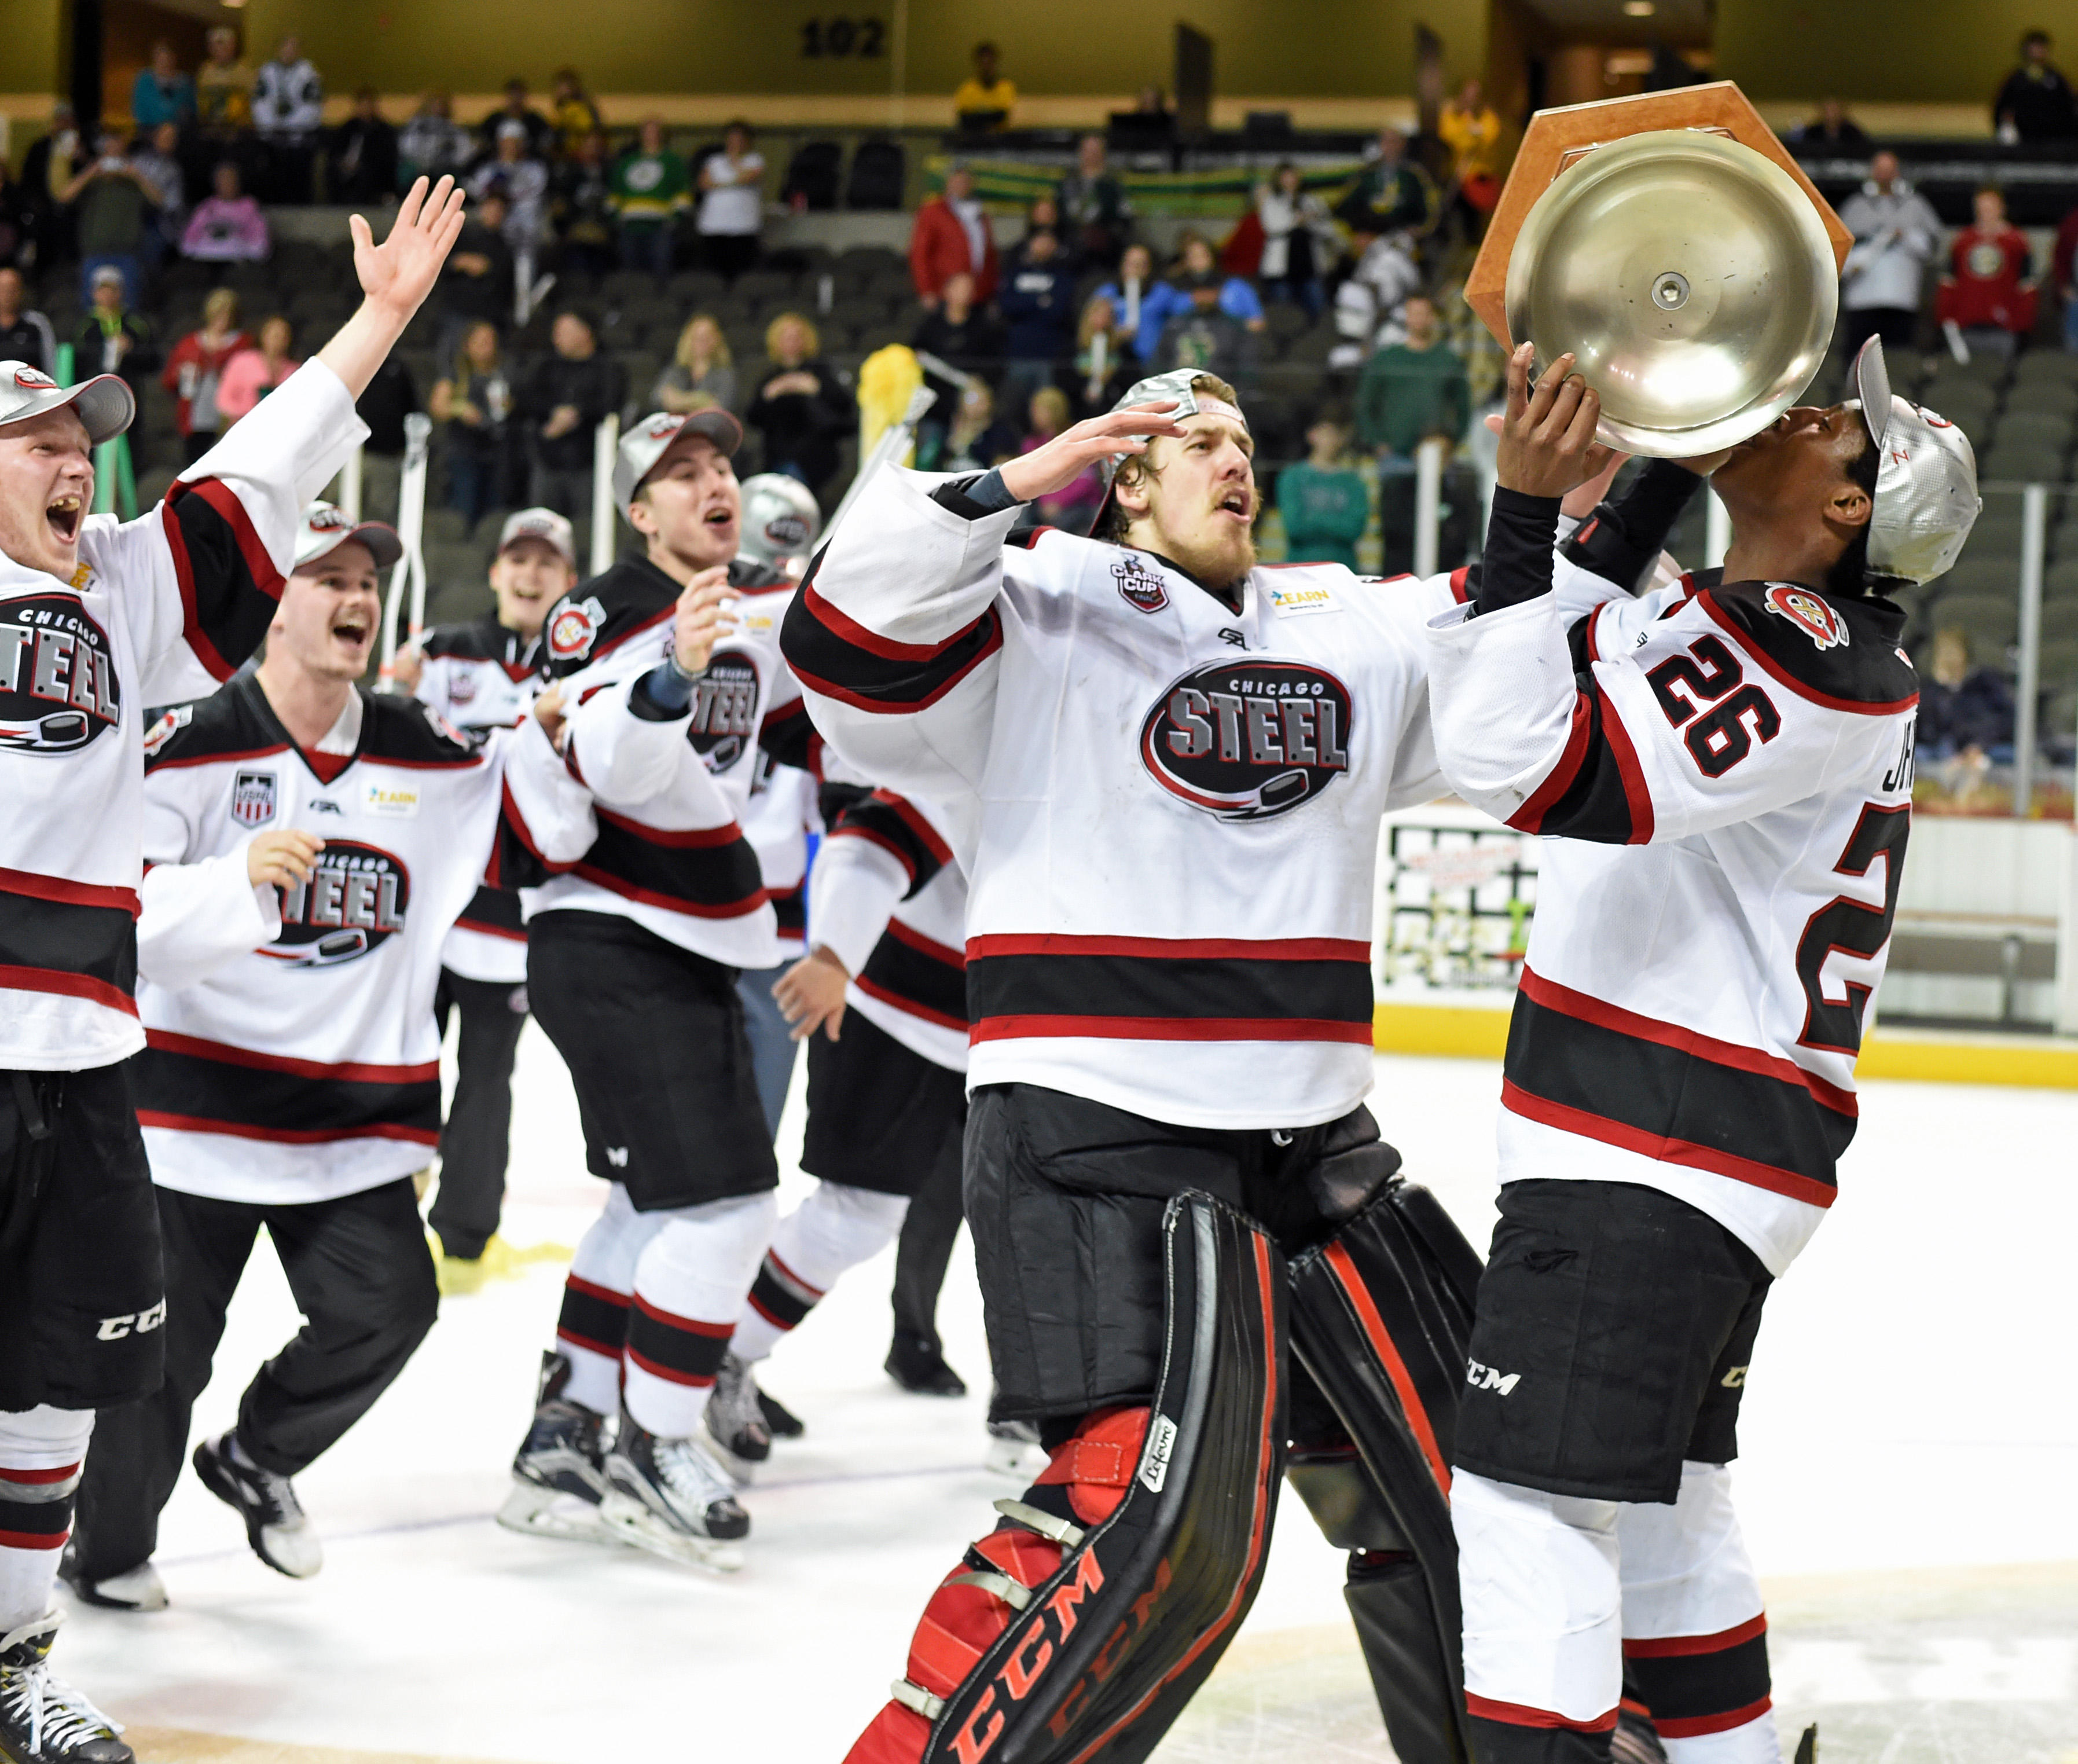 Chicago Steel Hockey Win Clark Cup Championship